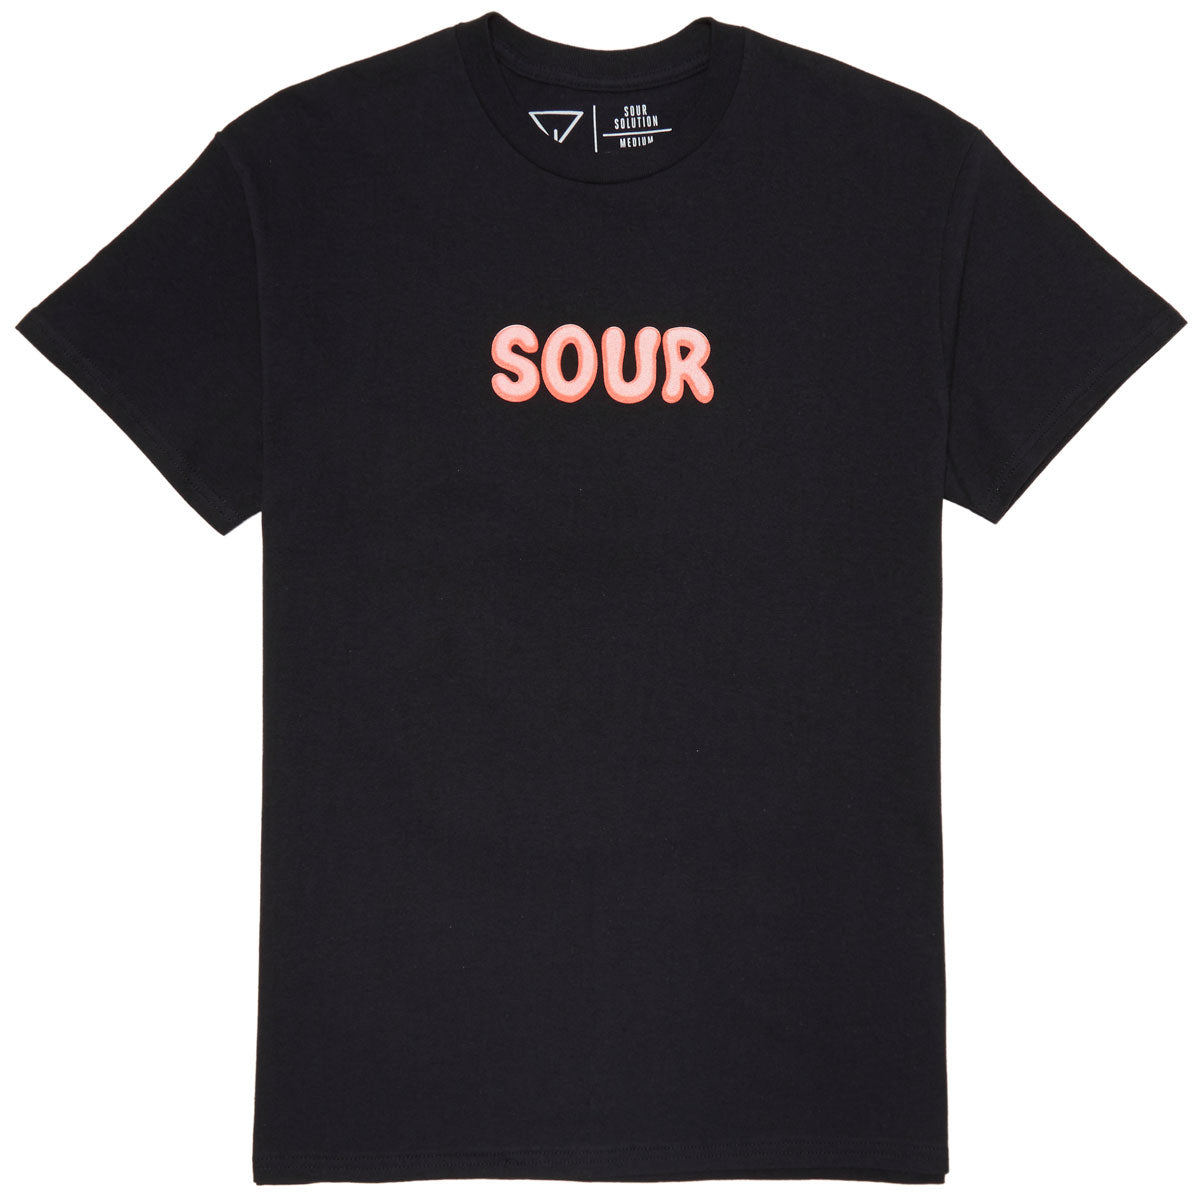 Sour Solution Humani T-Shirt - Black image 1